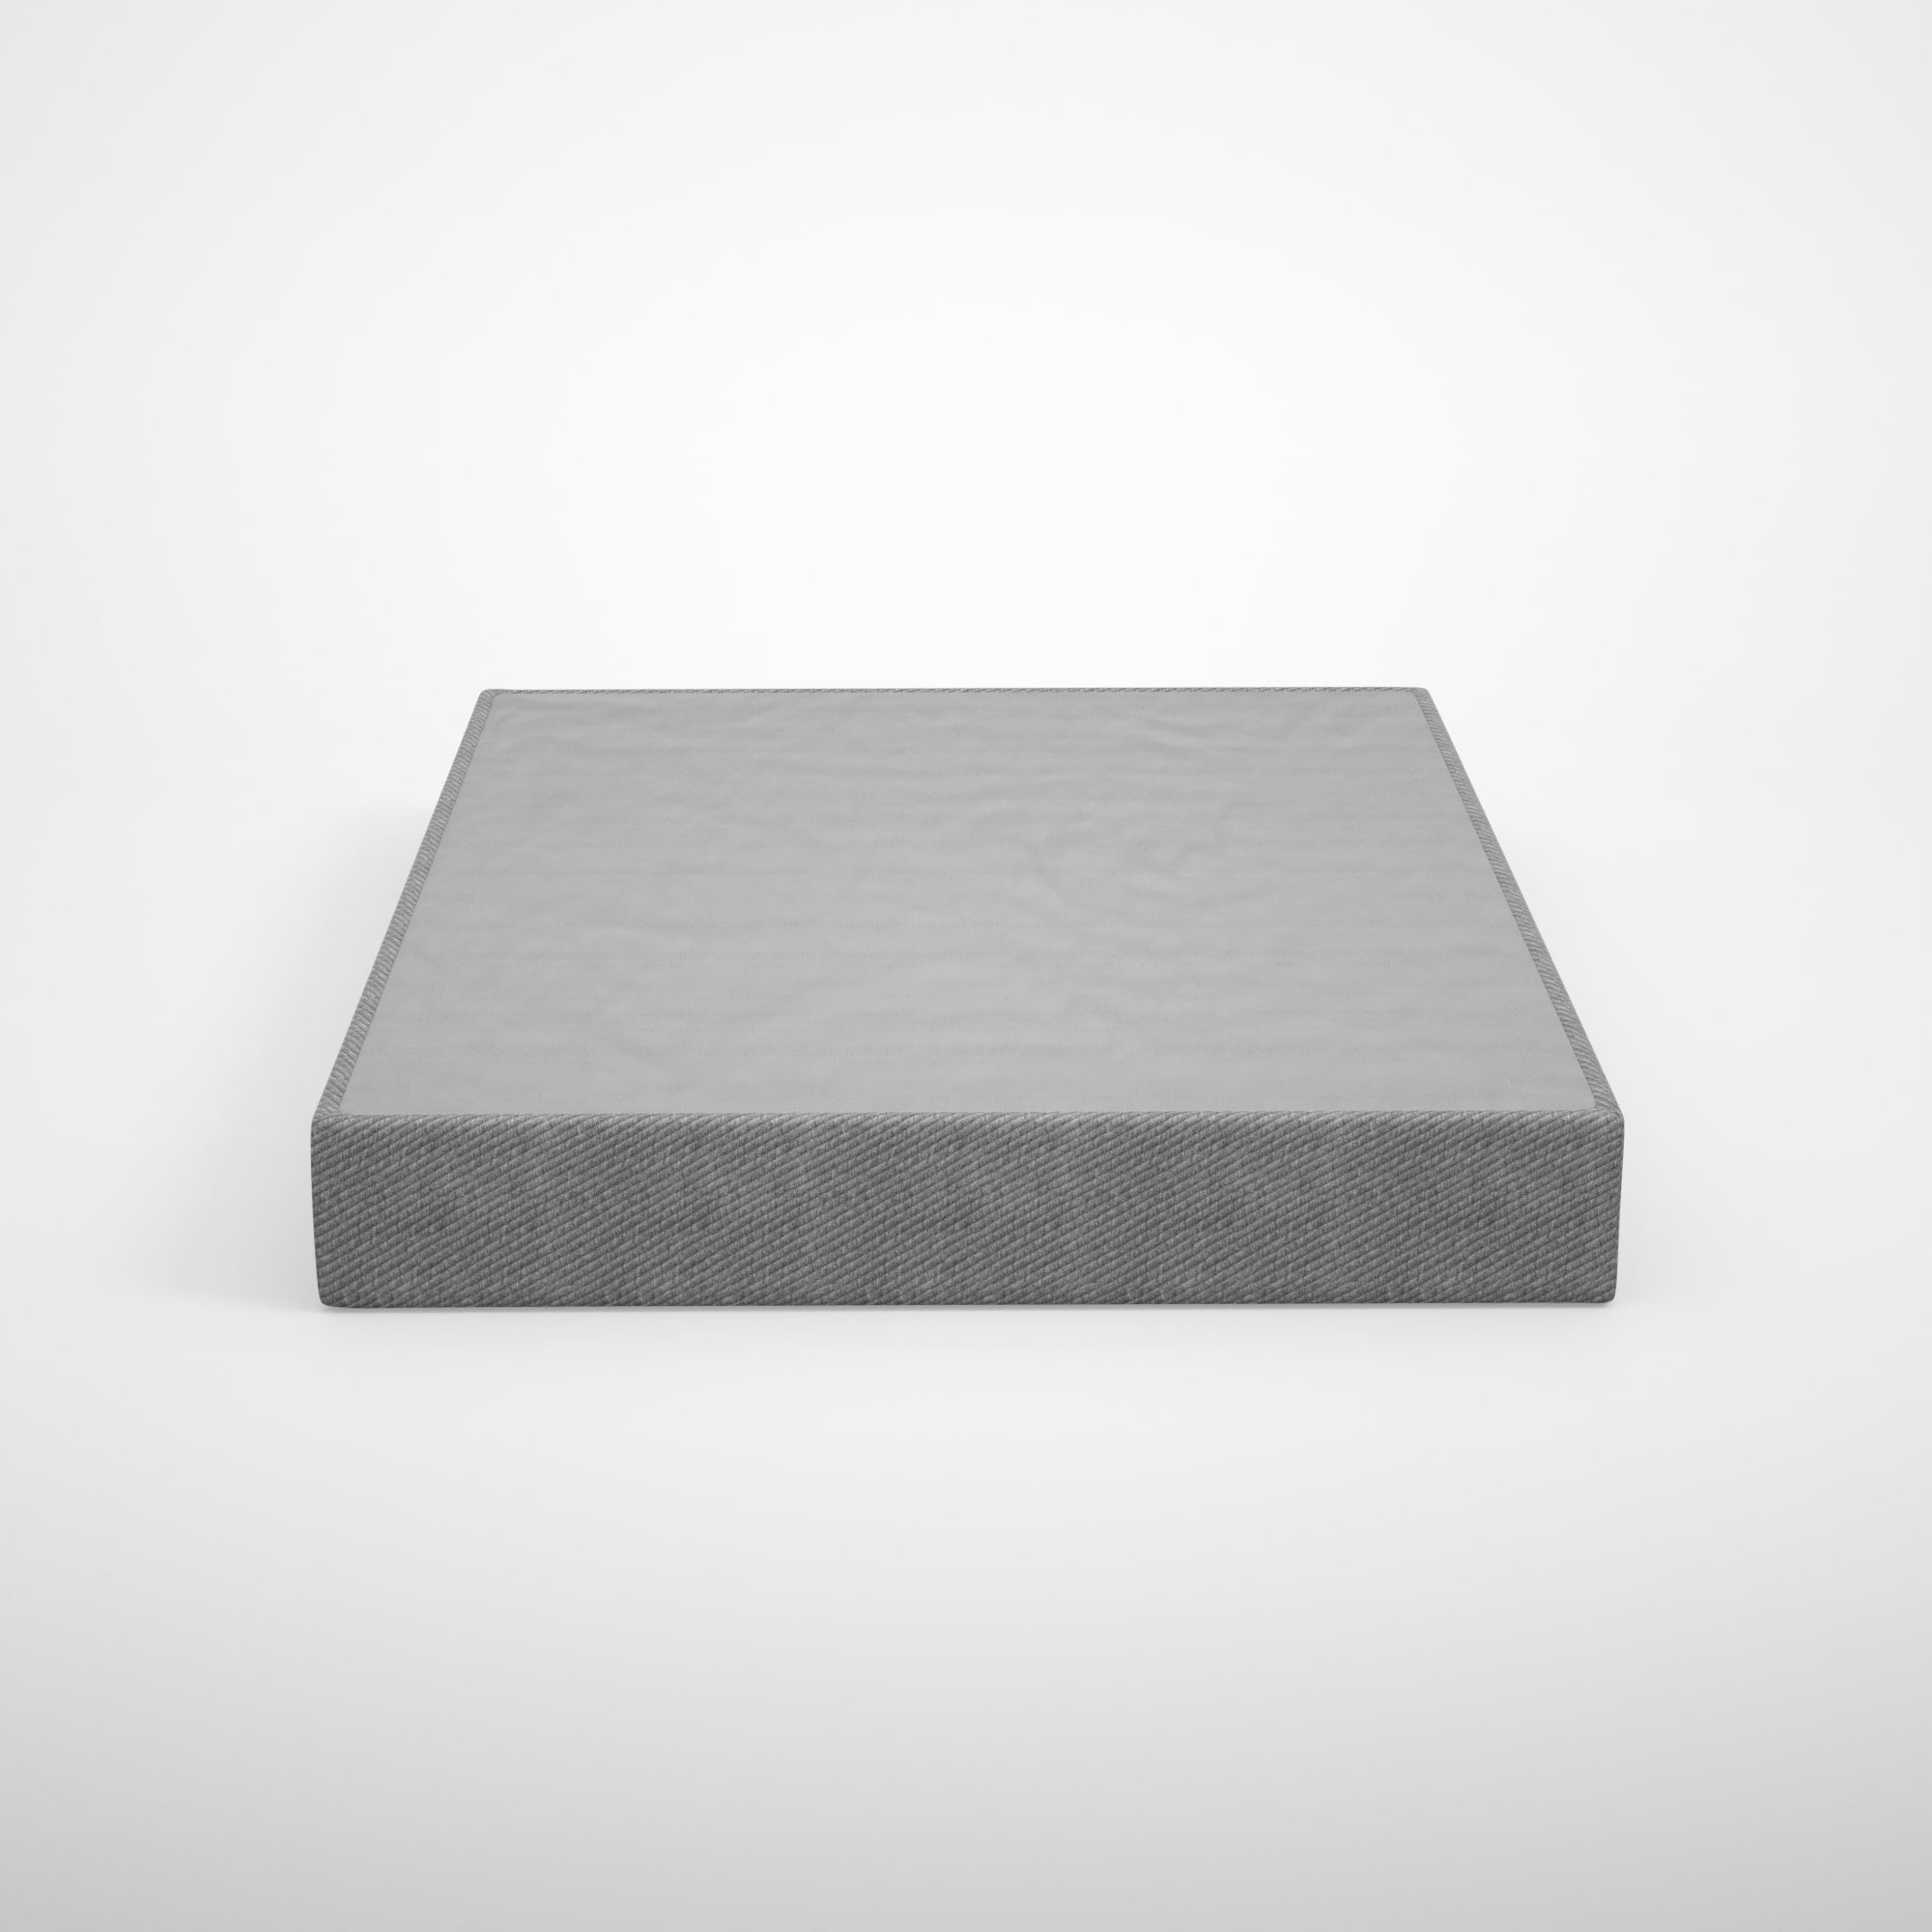 Smart Metal Box Spring 9 inch grey